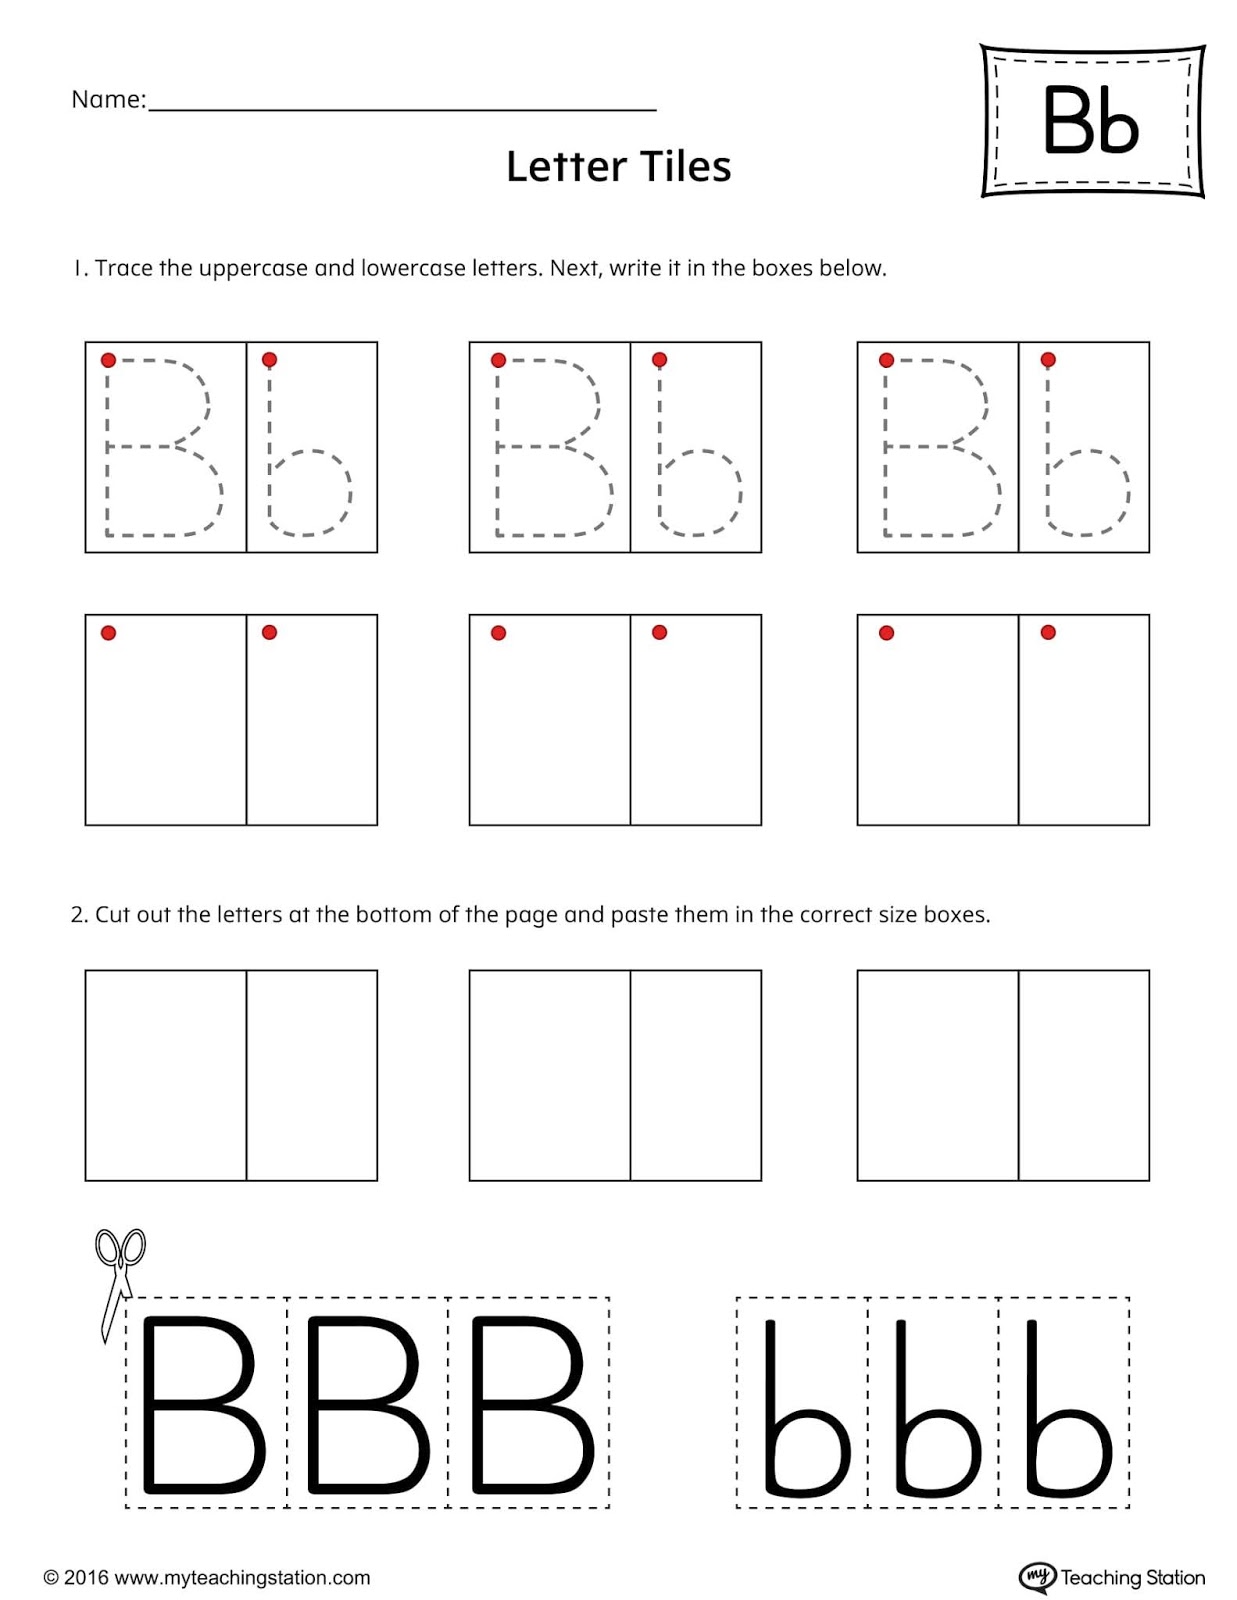 Worksheet b2. Print Letters Tiles. Confusing Letters Worksheets.